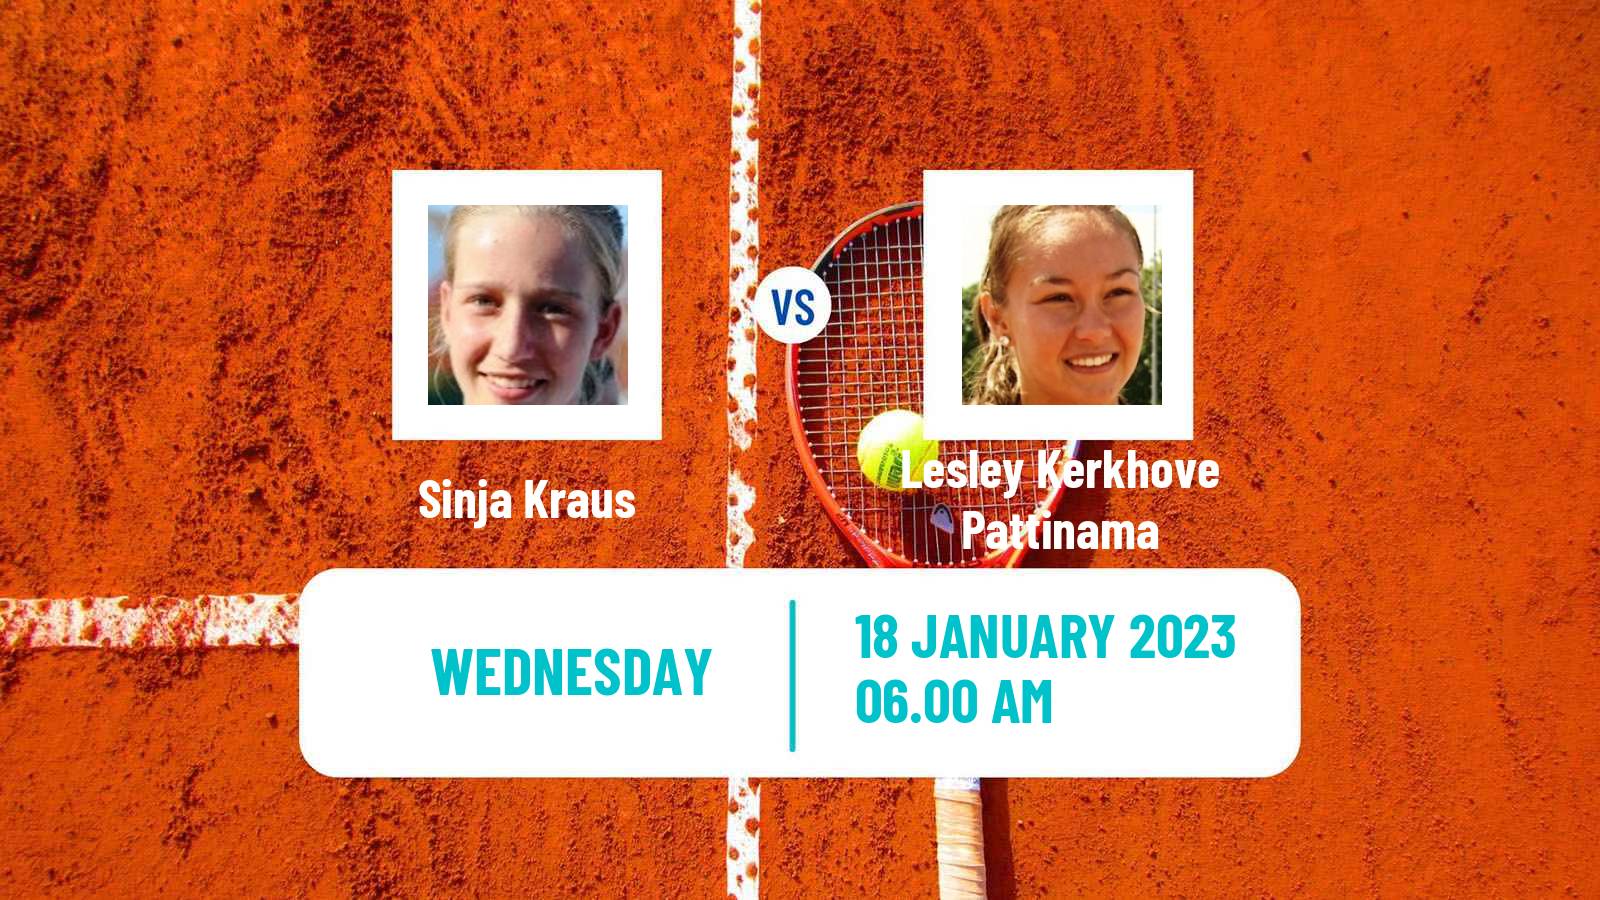 Tennis ITF Tournaments Sinja Kraus - Lesley Kerkhove Pattinama